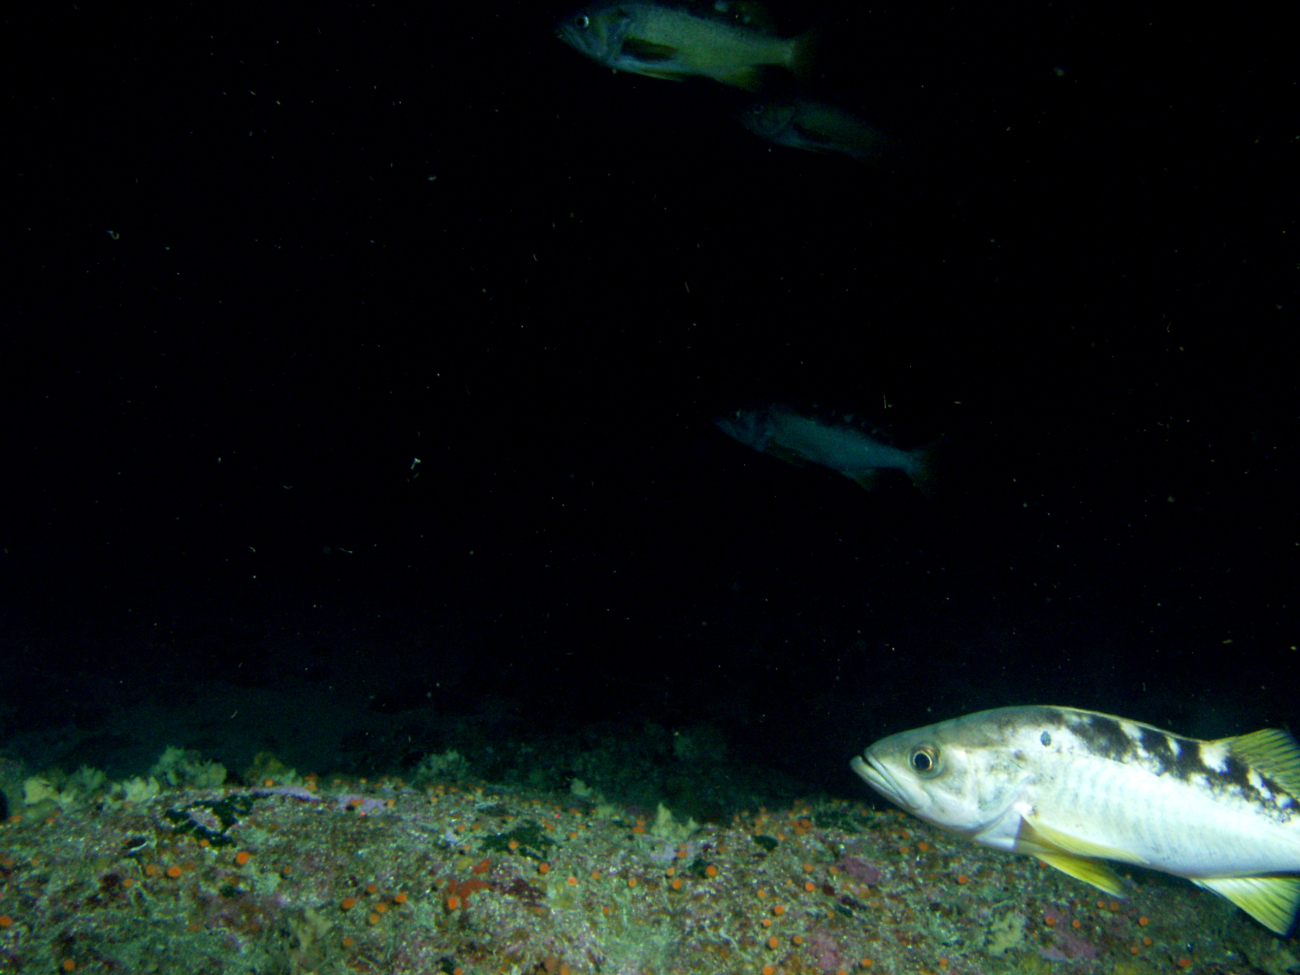 Yellowtail rockfish (Sebastes flavidus) school on rocky reef habitatat 95 meters depth